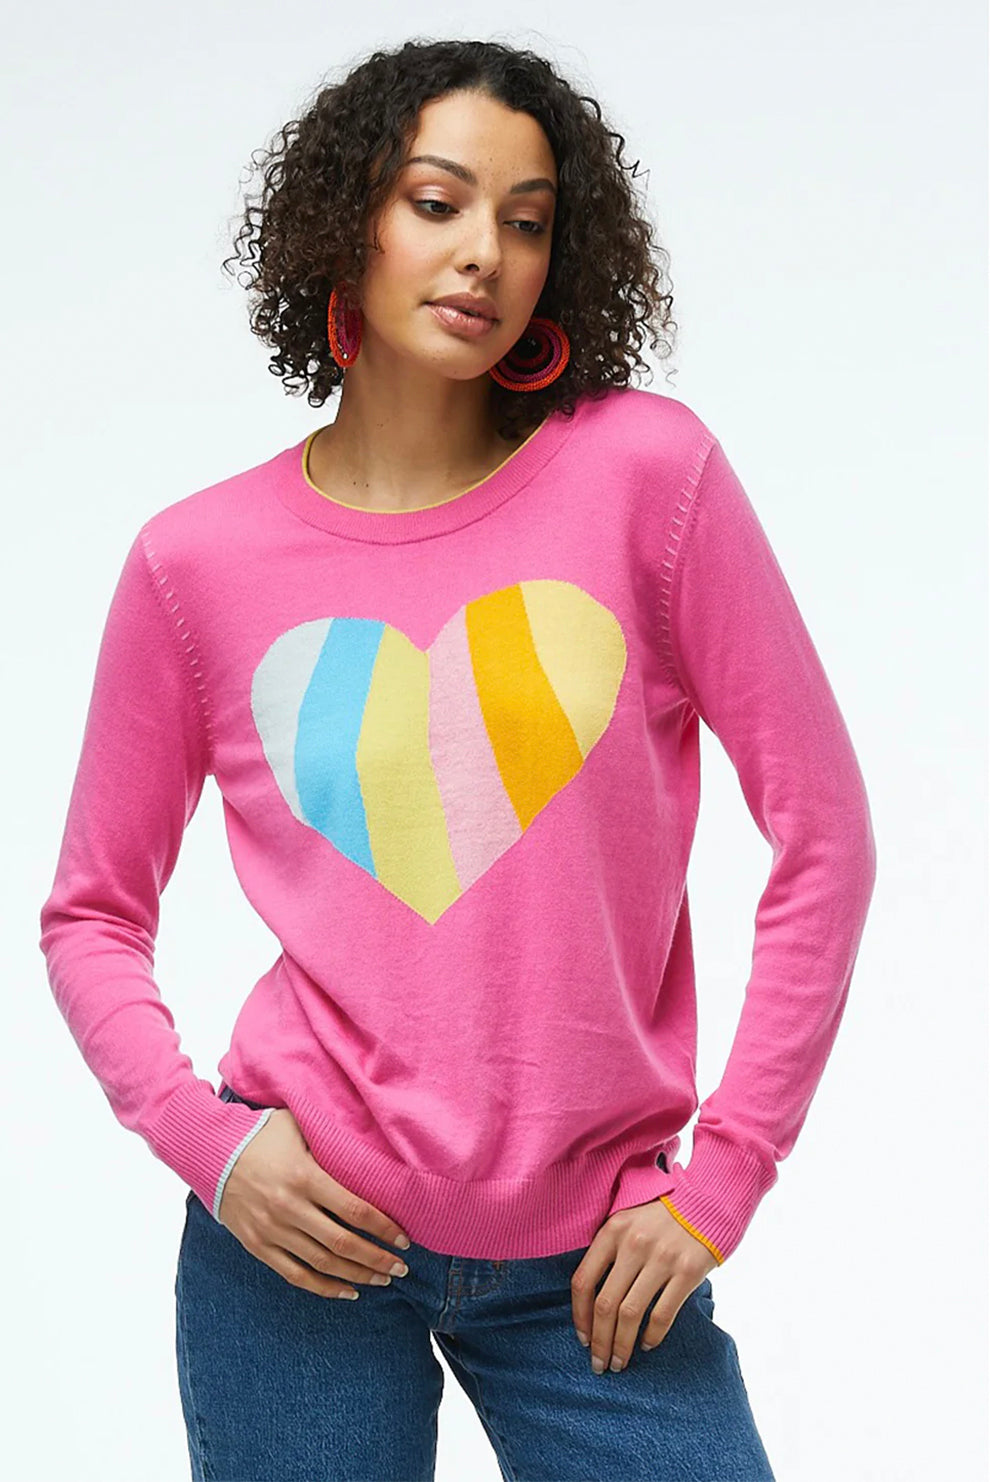 Zaket and Plover Pattern Heart Sweater | Style ZP4461U